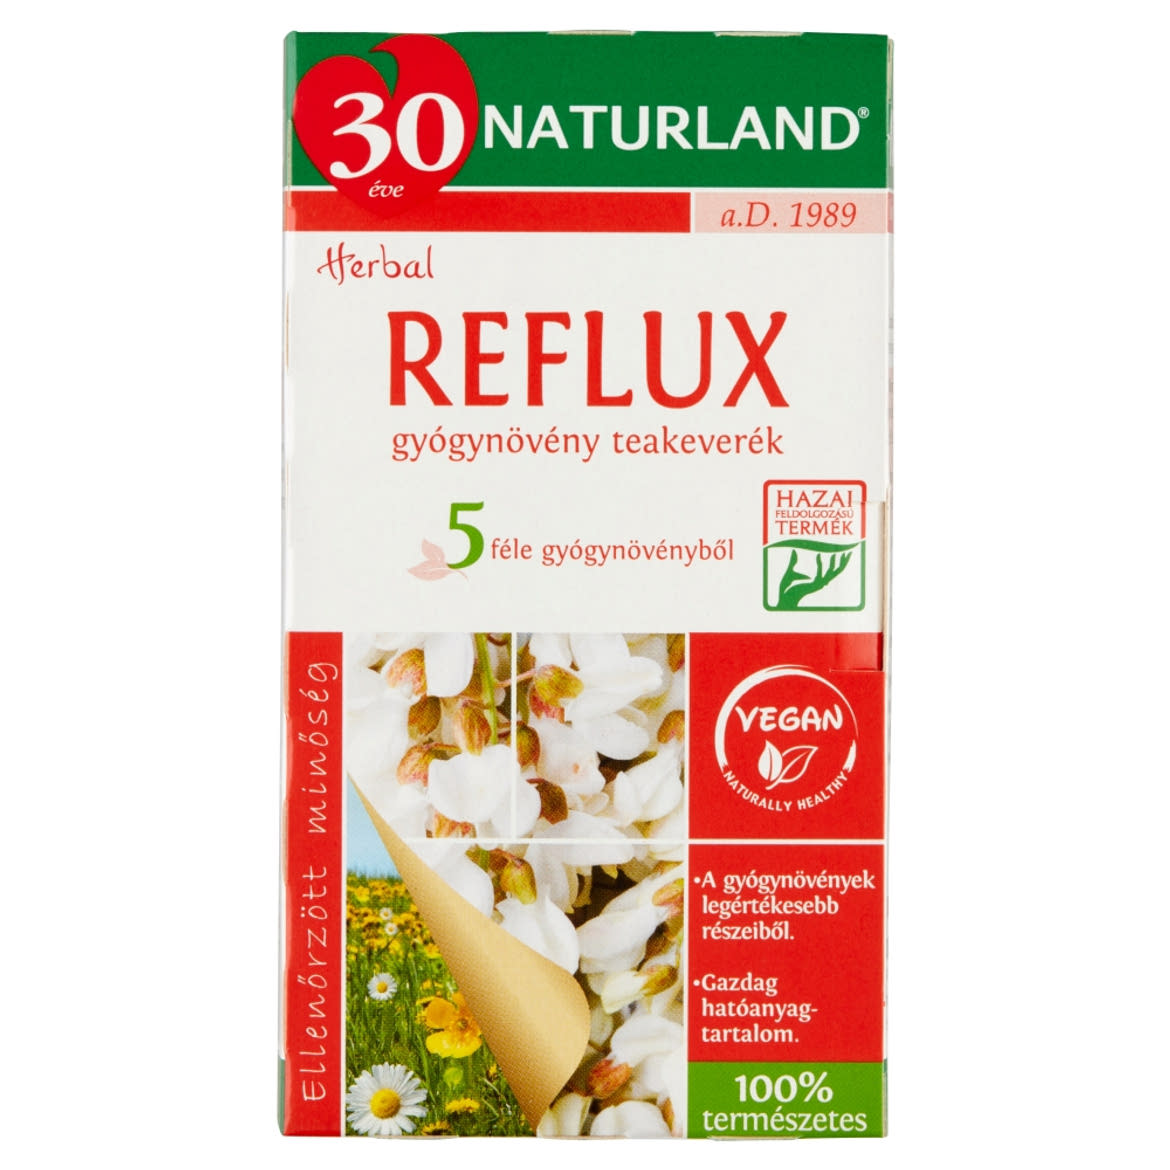 Naturland Herbal Reflux gyÃ³gynÃ¶vÃ©ny teakeverÃ©k 5 fÃ©le gyÃ³gynÃ¶vÃ©nybÅ‘l 20 filter 28 g